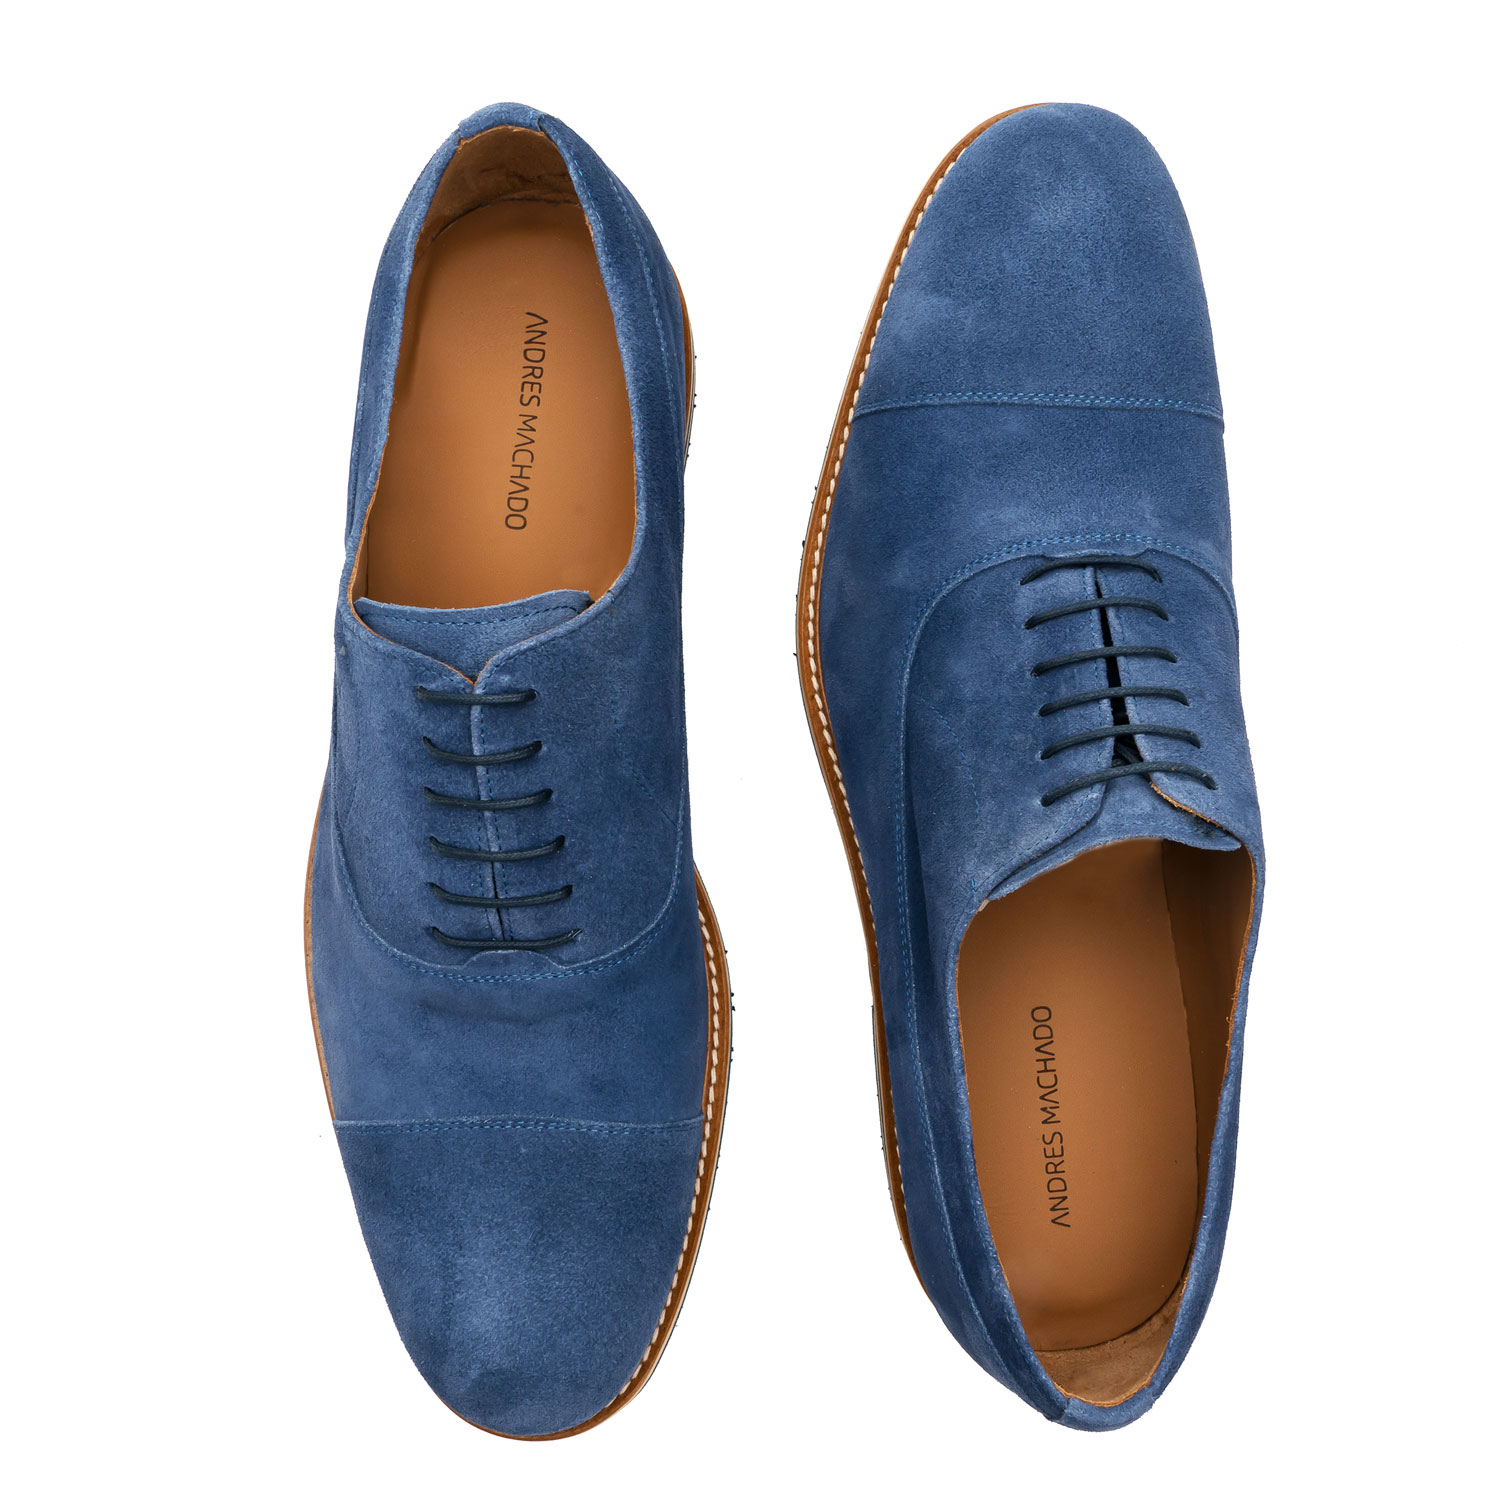 Zapatos Oxford Serraje Azul 